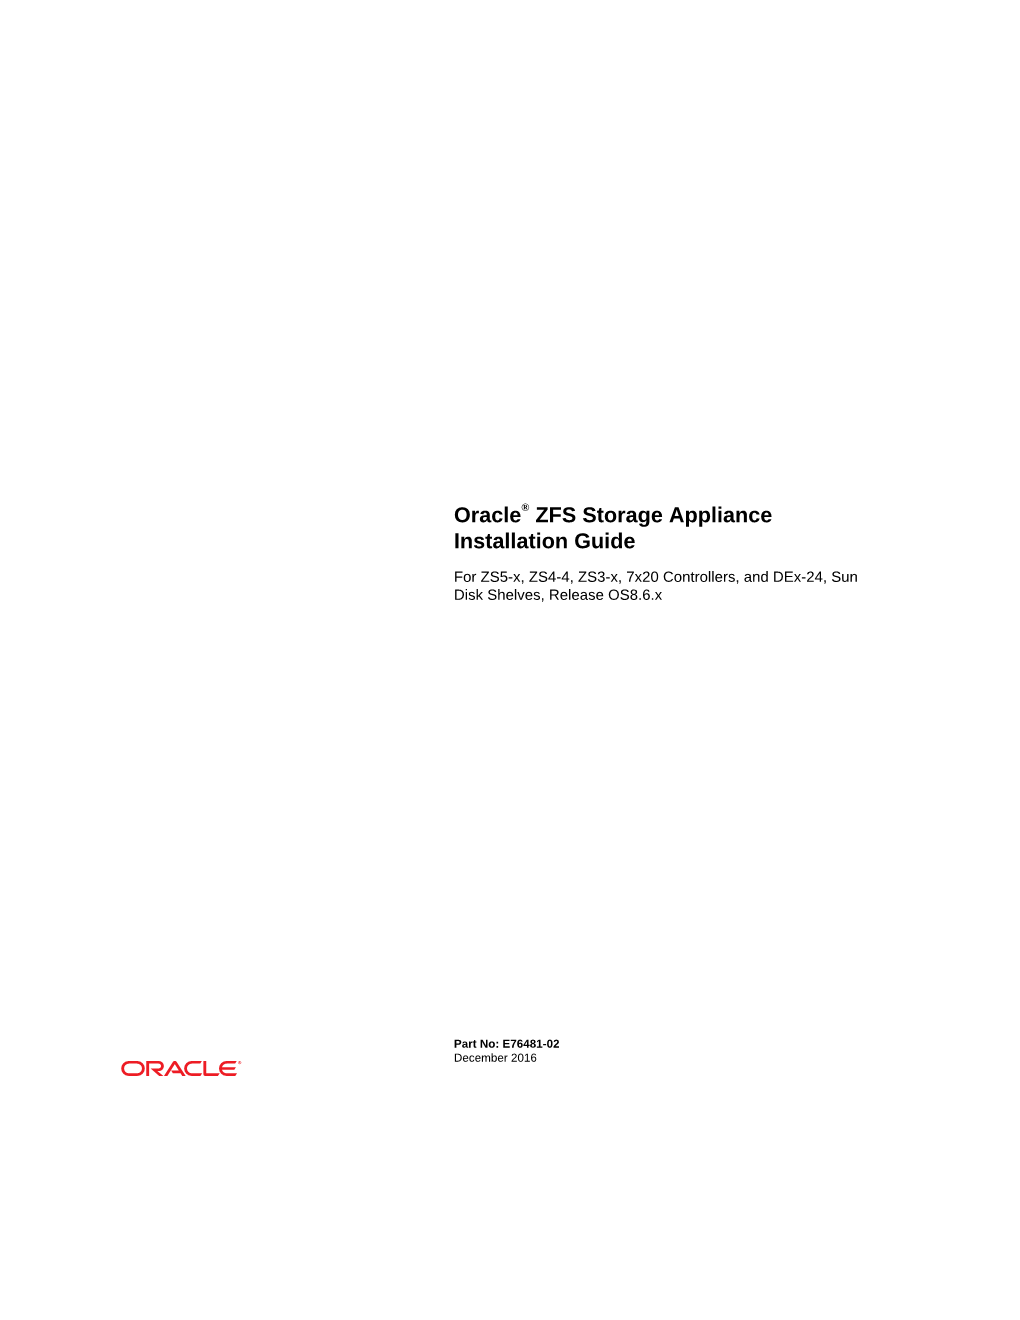 Oracle® ZFS Storage Appliance Installation Guide